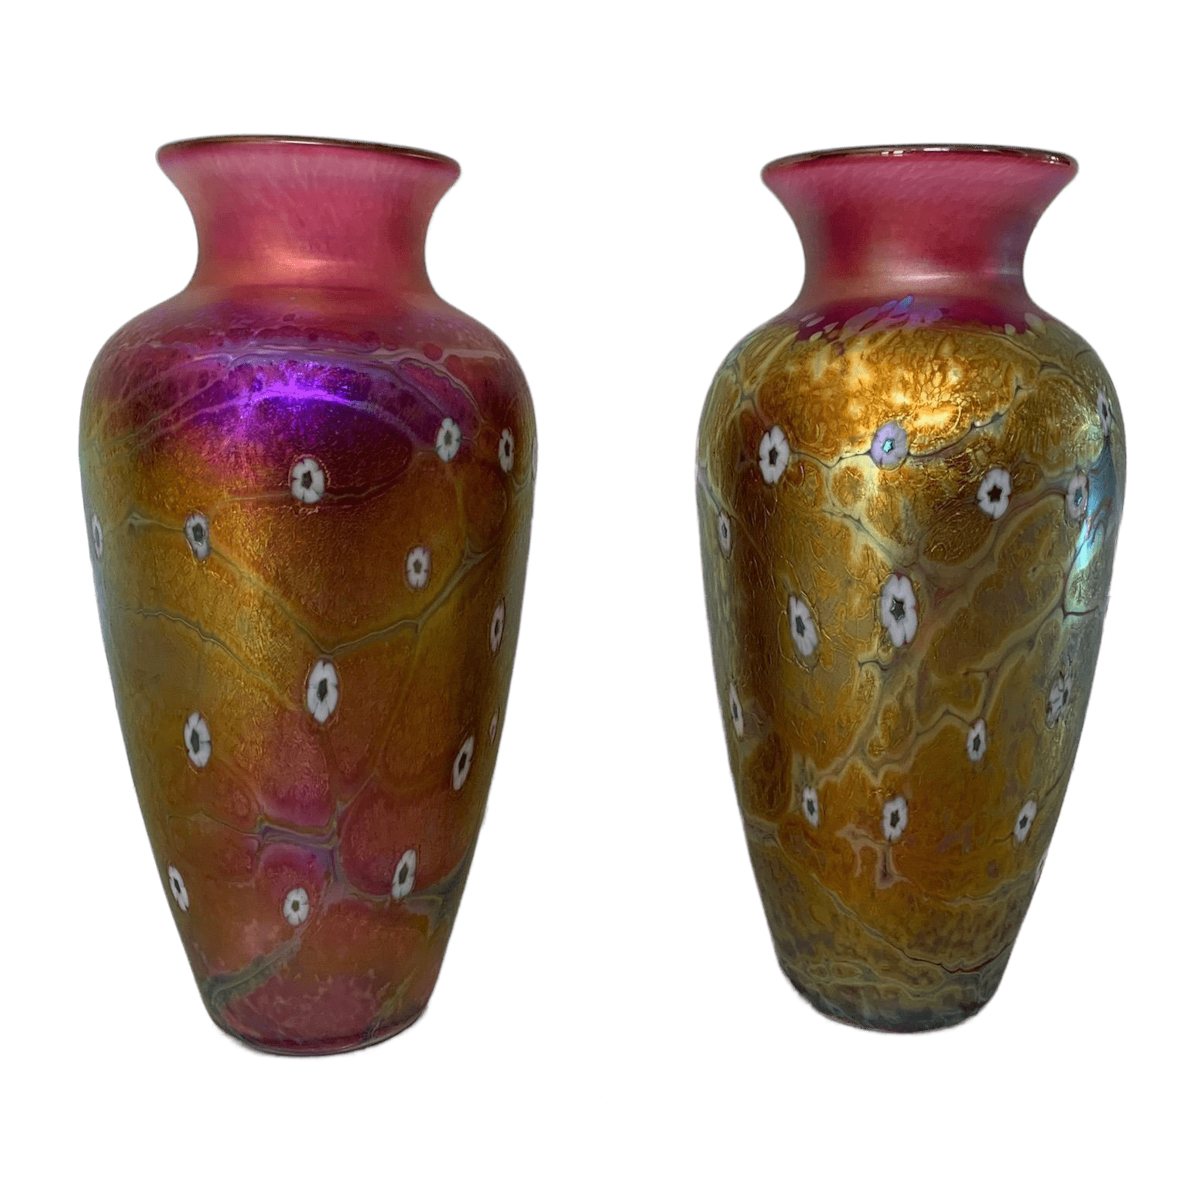 Vases by Richard Golding